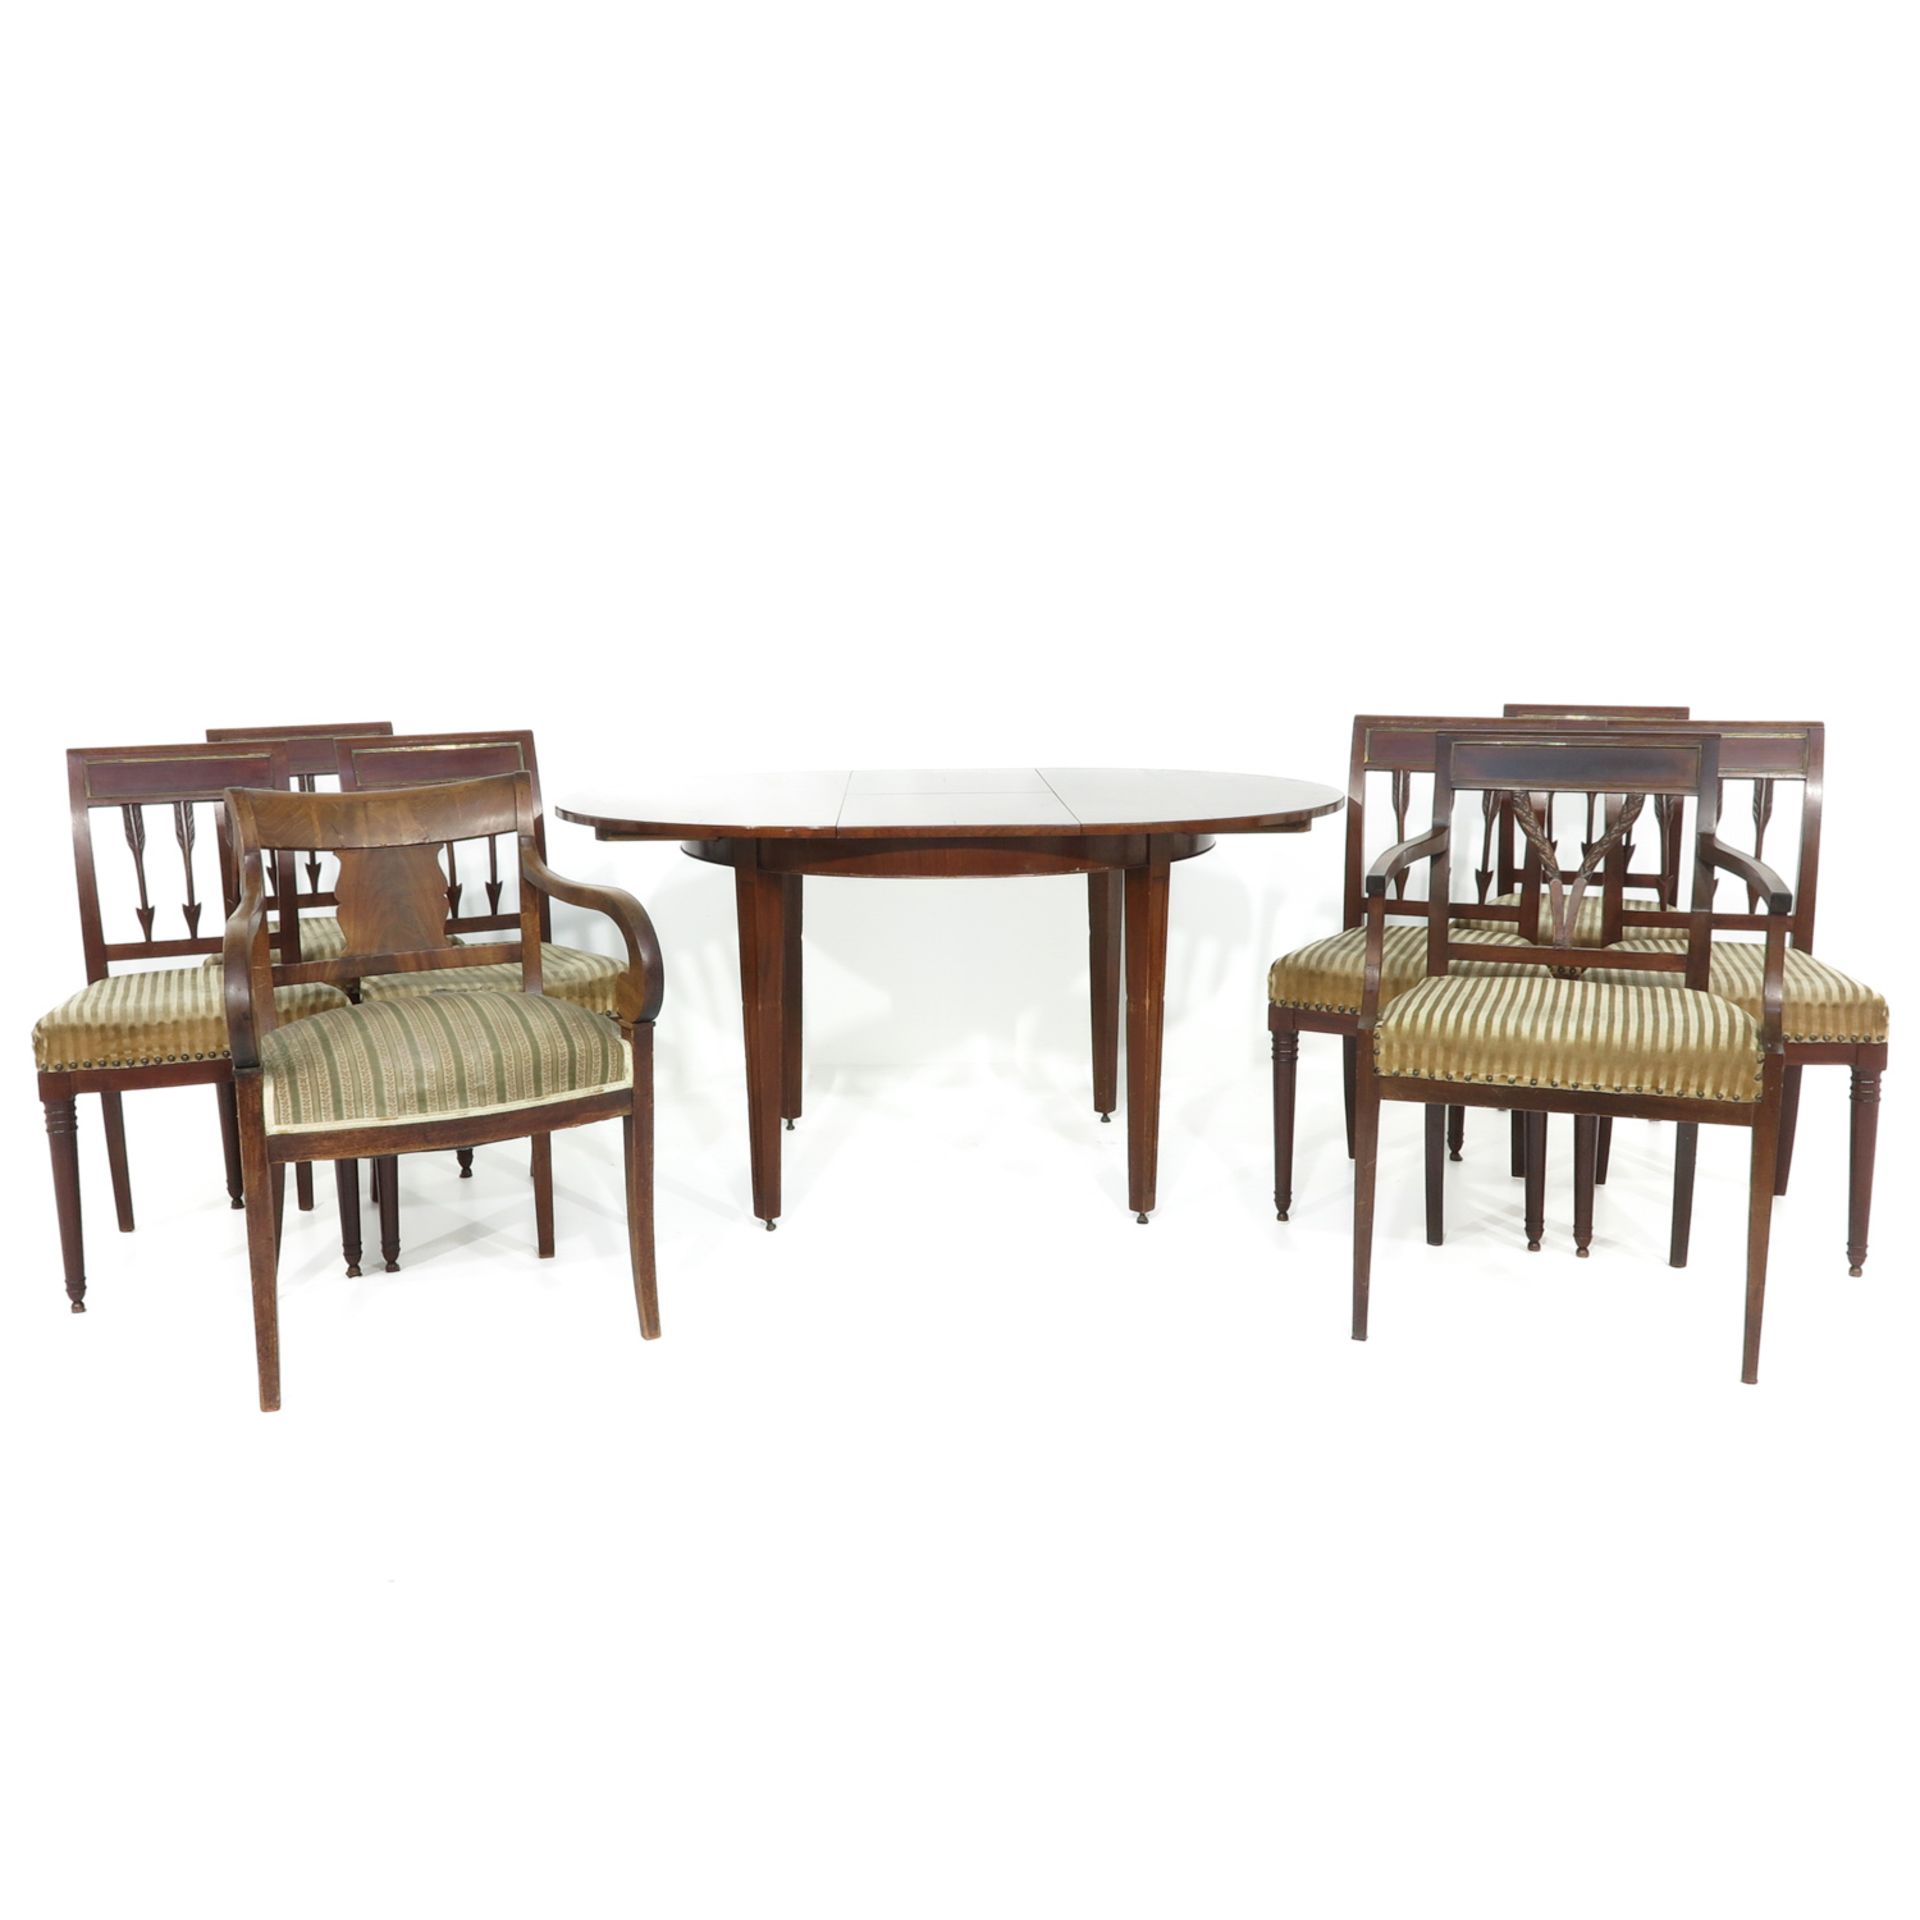 An English Table and Chair Set